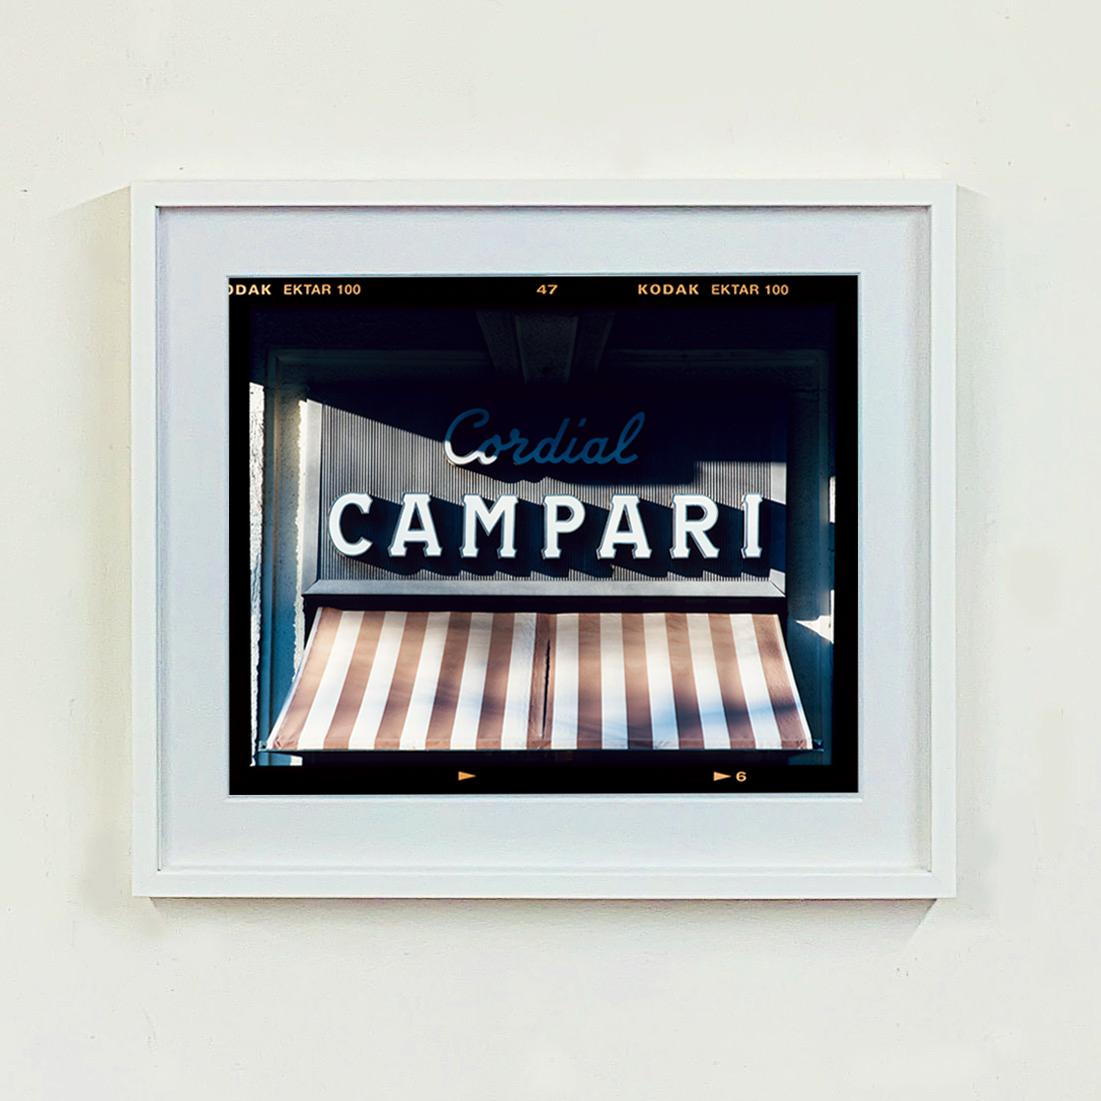 Cordial Campari, Foto aus Richard Heeps Serie 